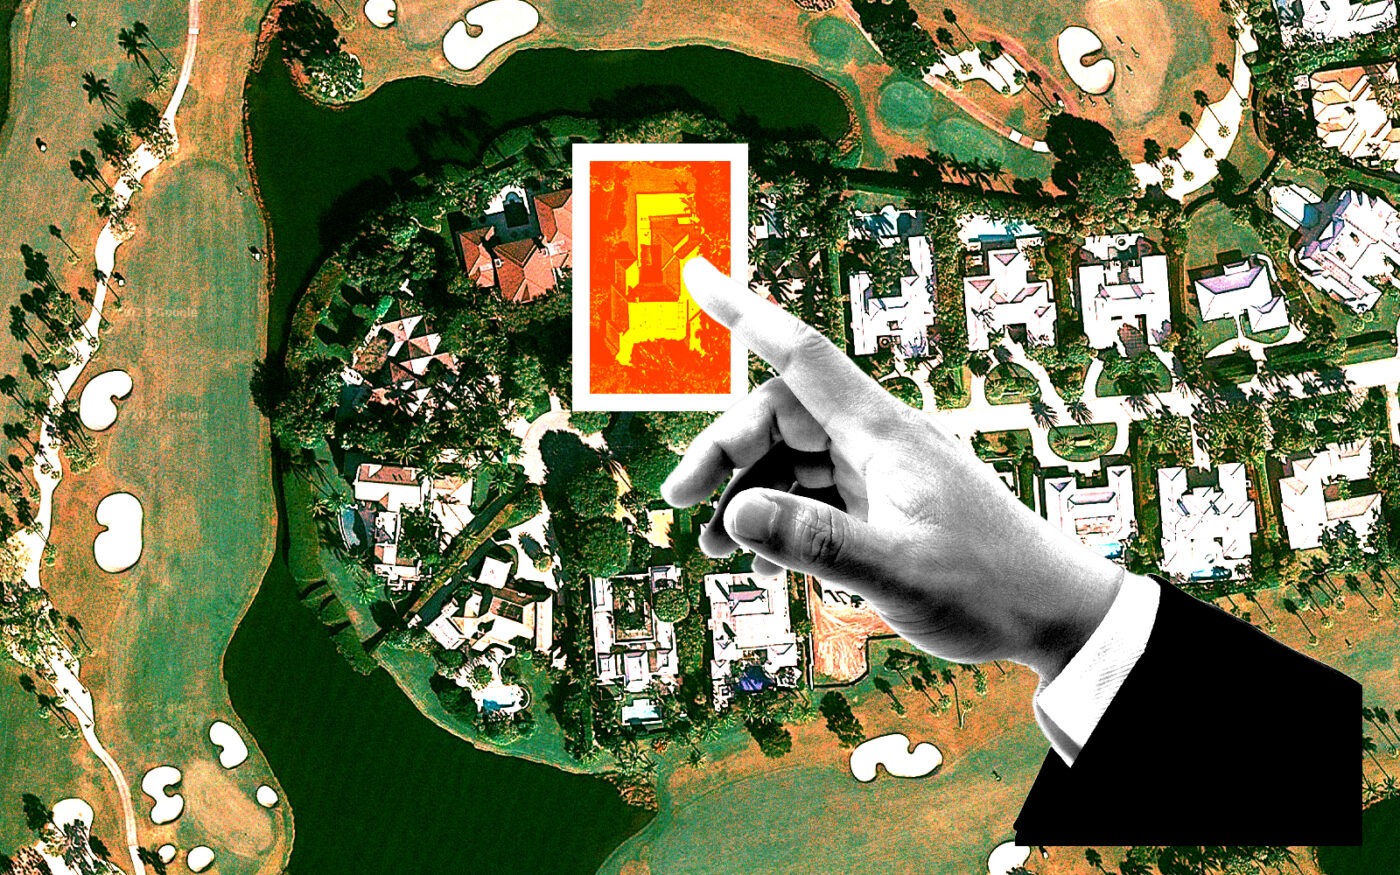 Financier Sells North Palm Beach Home for $16M